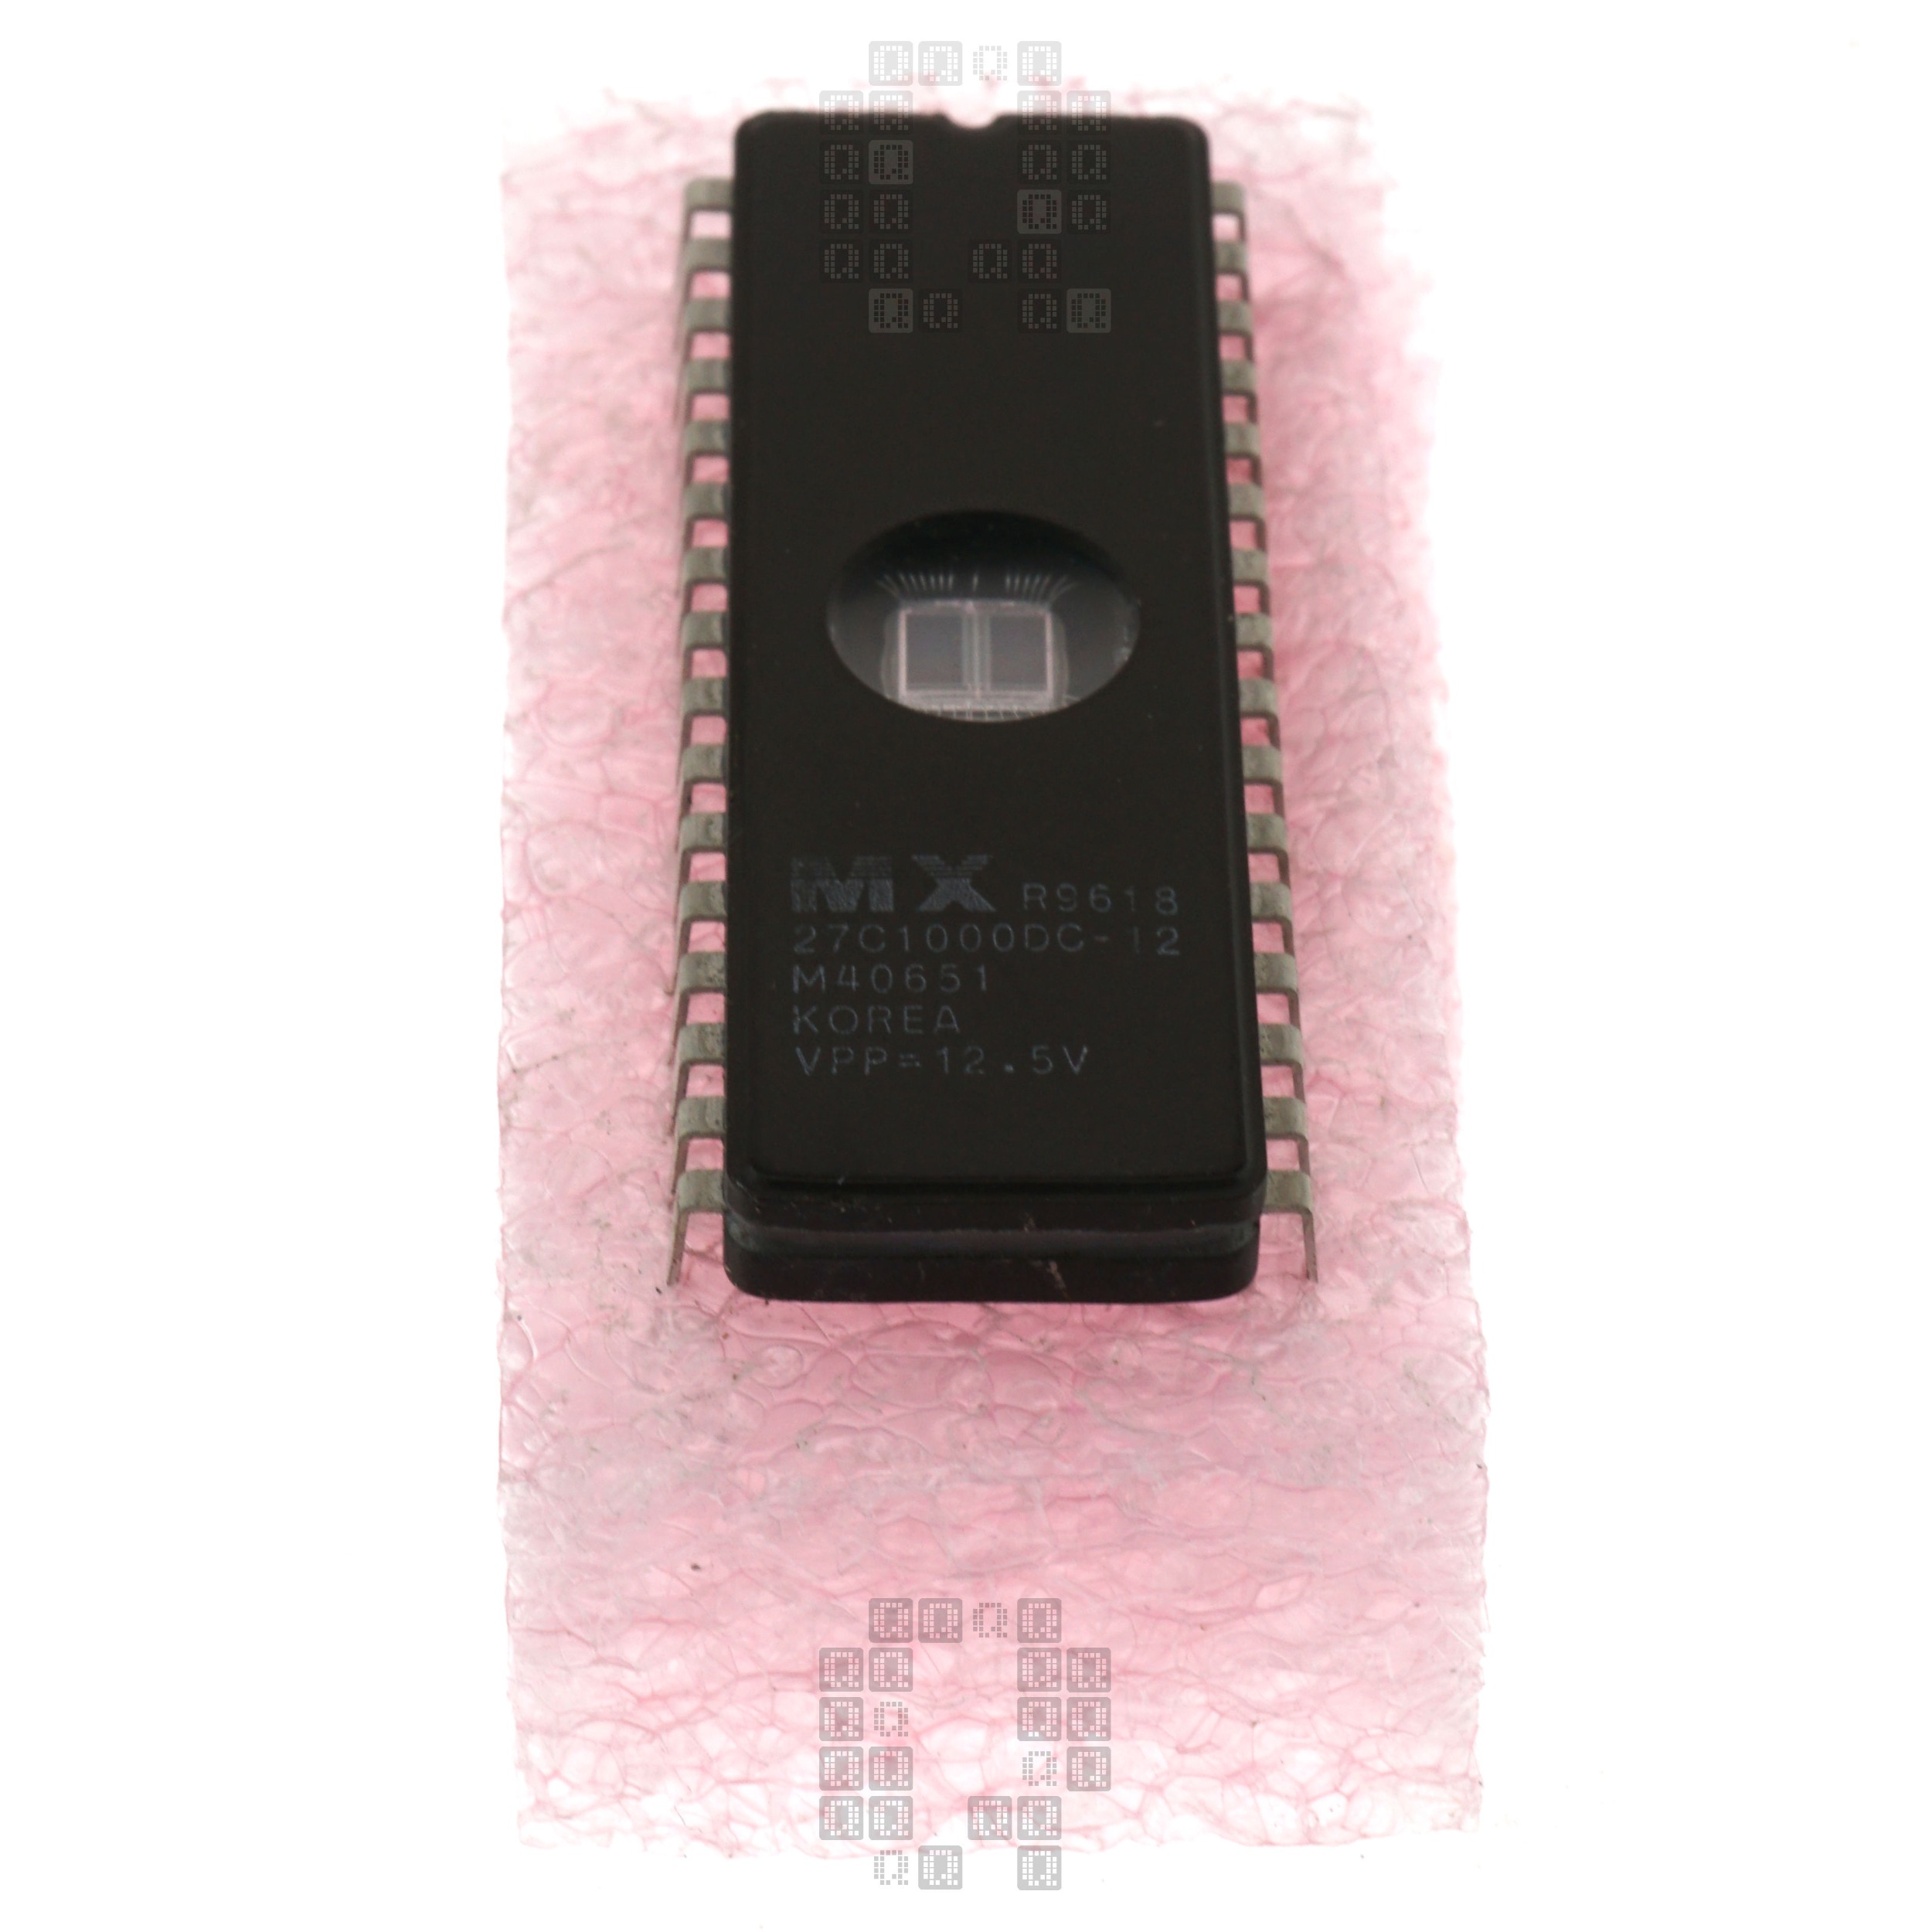 MACRONIX 27C1000DC-12 1M-Bit (128K x 8) CMOS EPROM, DIP32, UV-Erasable